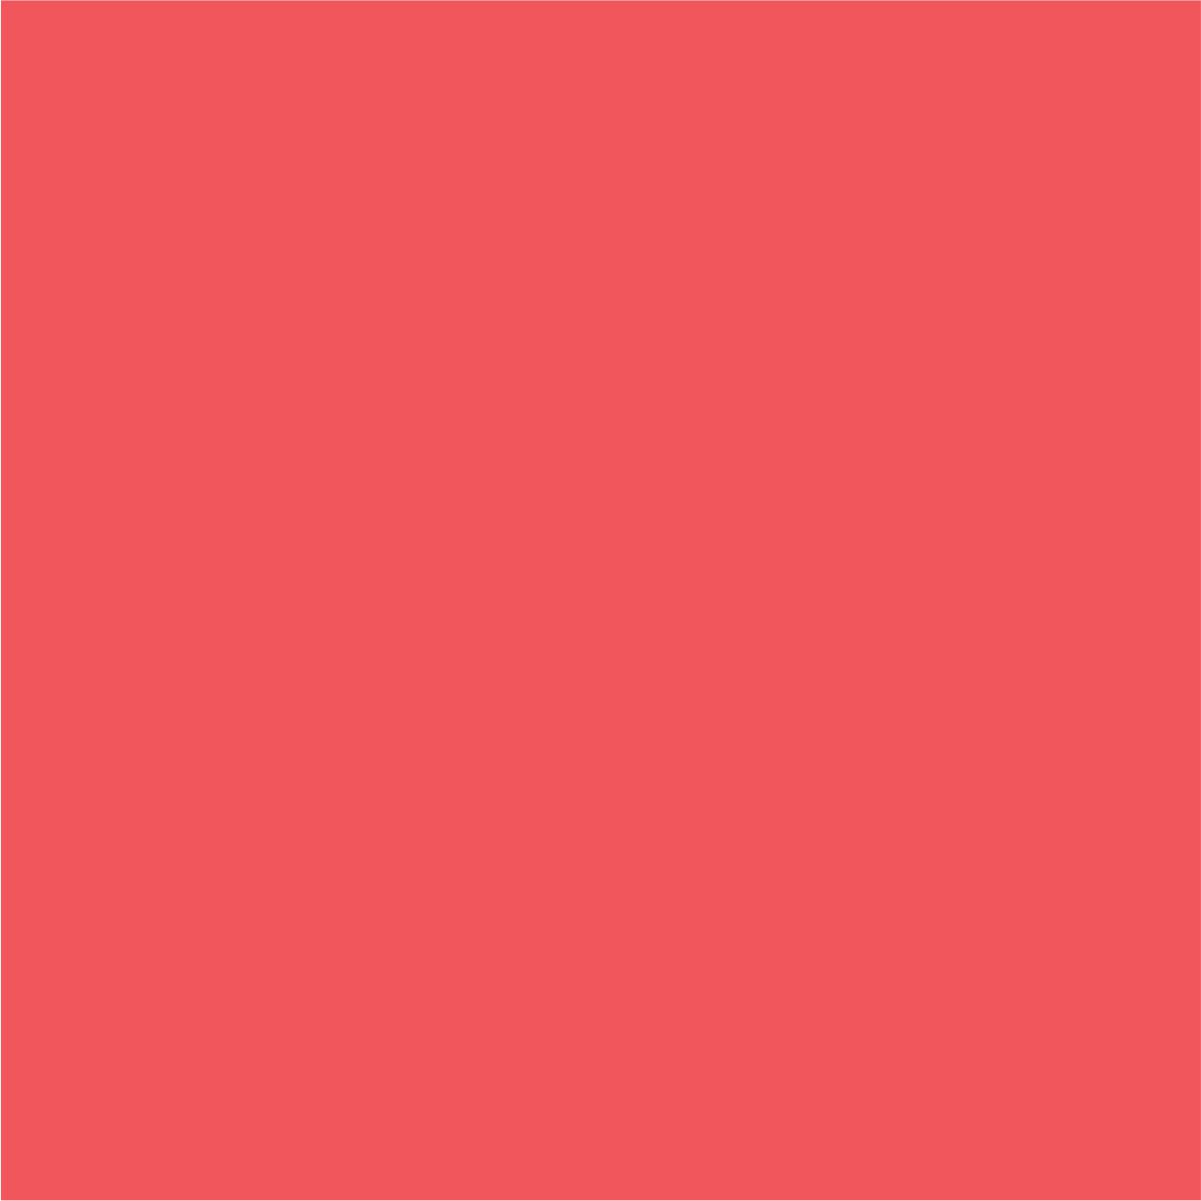 FashionFlex® Heat-Sensitive HTV 12x20 Red (looks slightly pink) - CraftCutterSupply.com